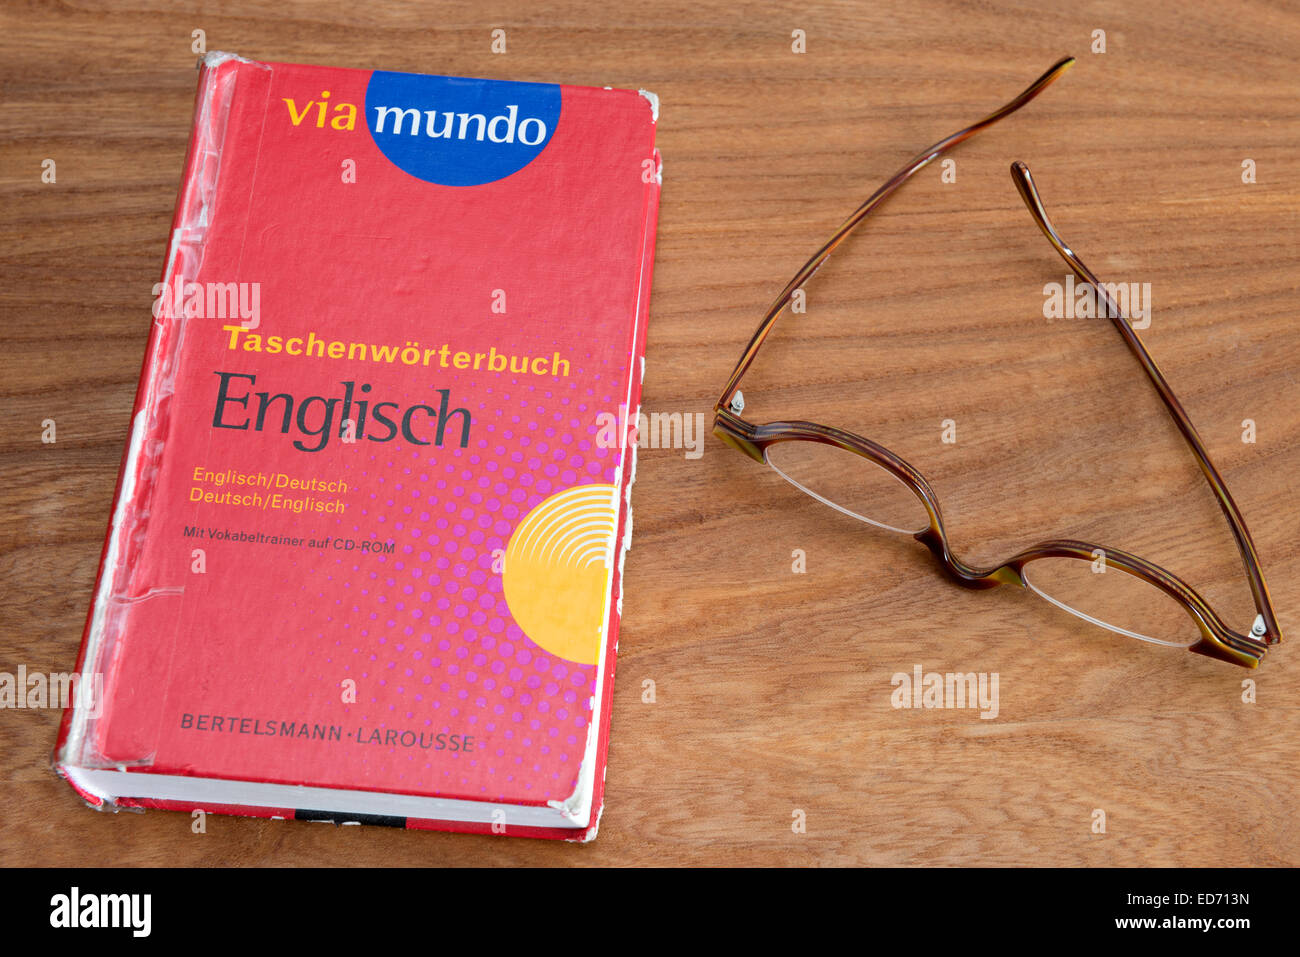 Via Mundo Englisch to Deutsch dictionary Stock Photo